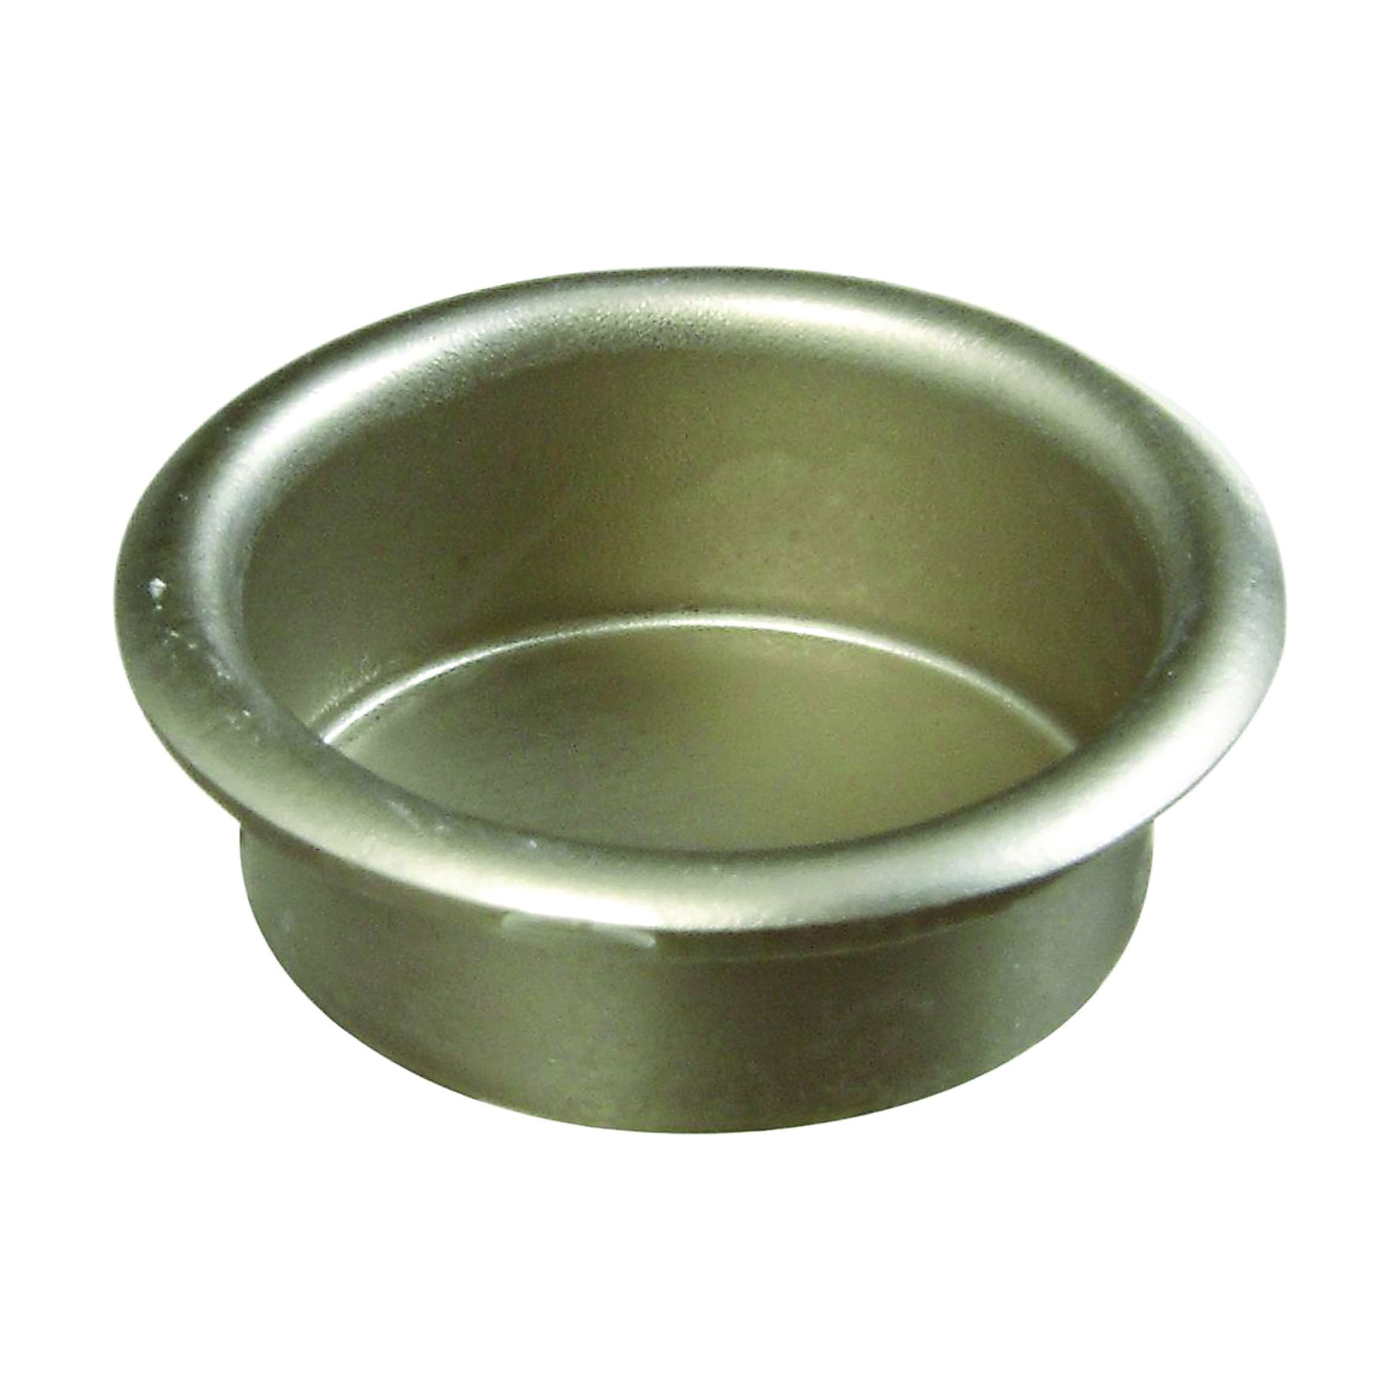 N335-679 Door Cup Pull, Steel, Satin Nickel